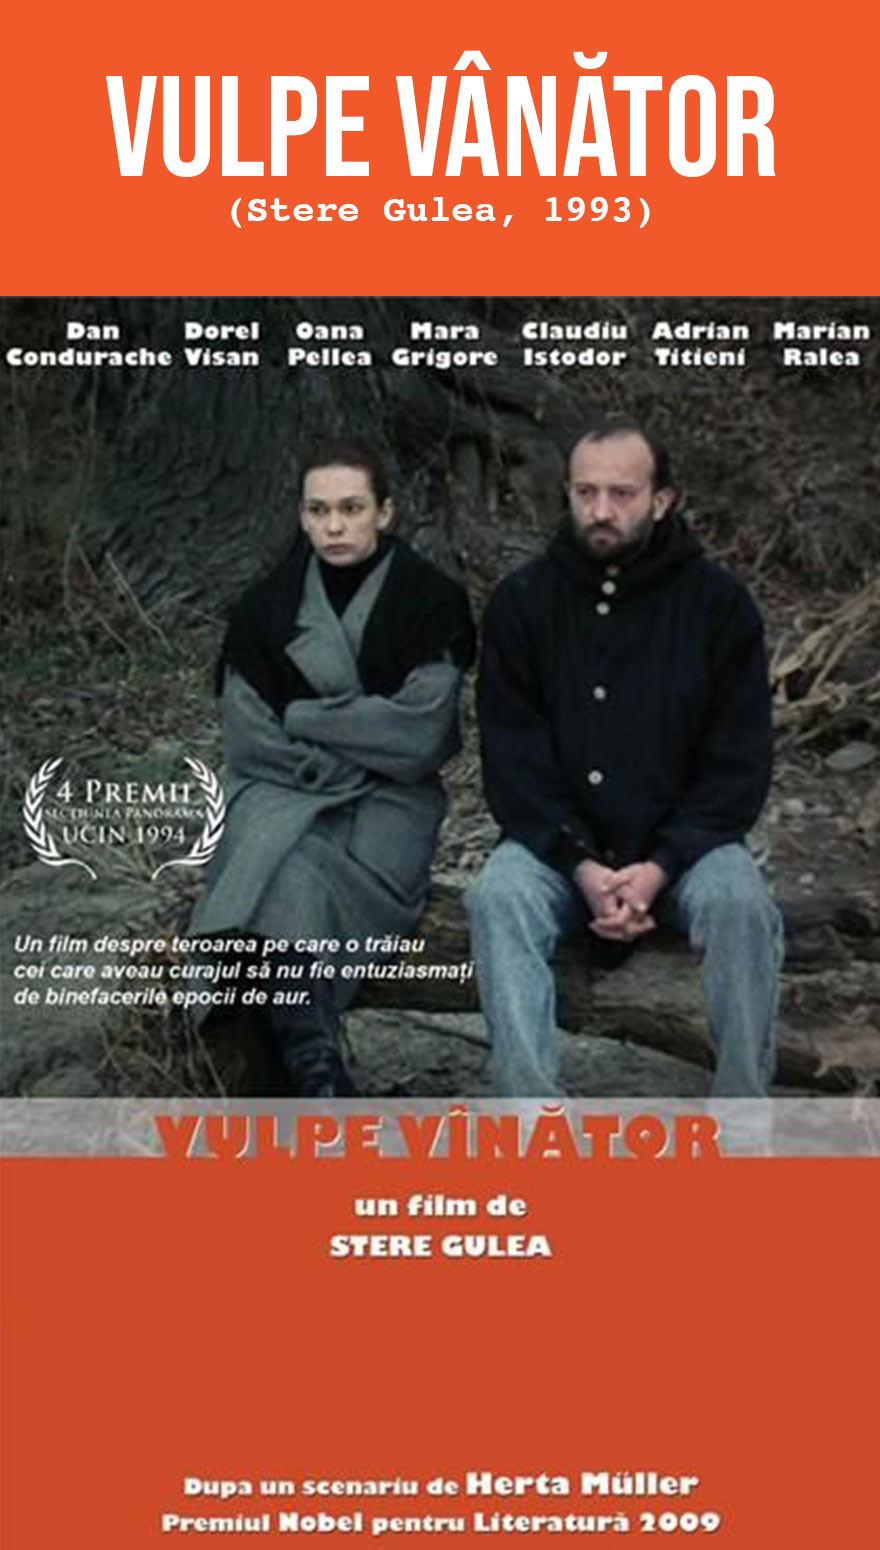 Fox Hunter - feature film online by Stere Gulea - CINEPUB